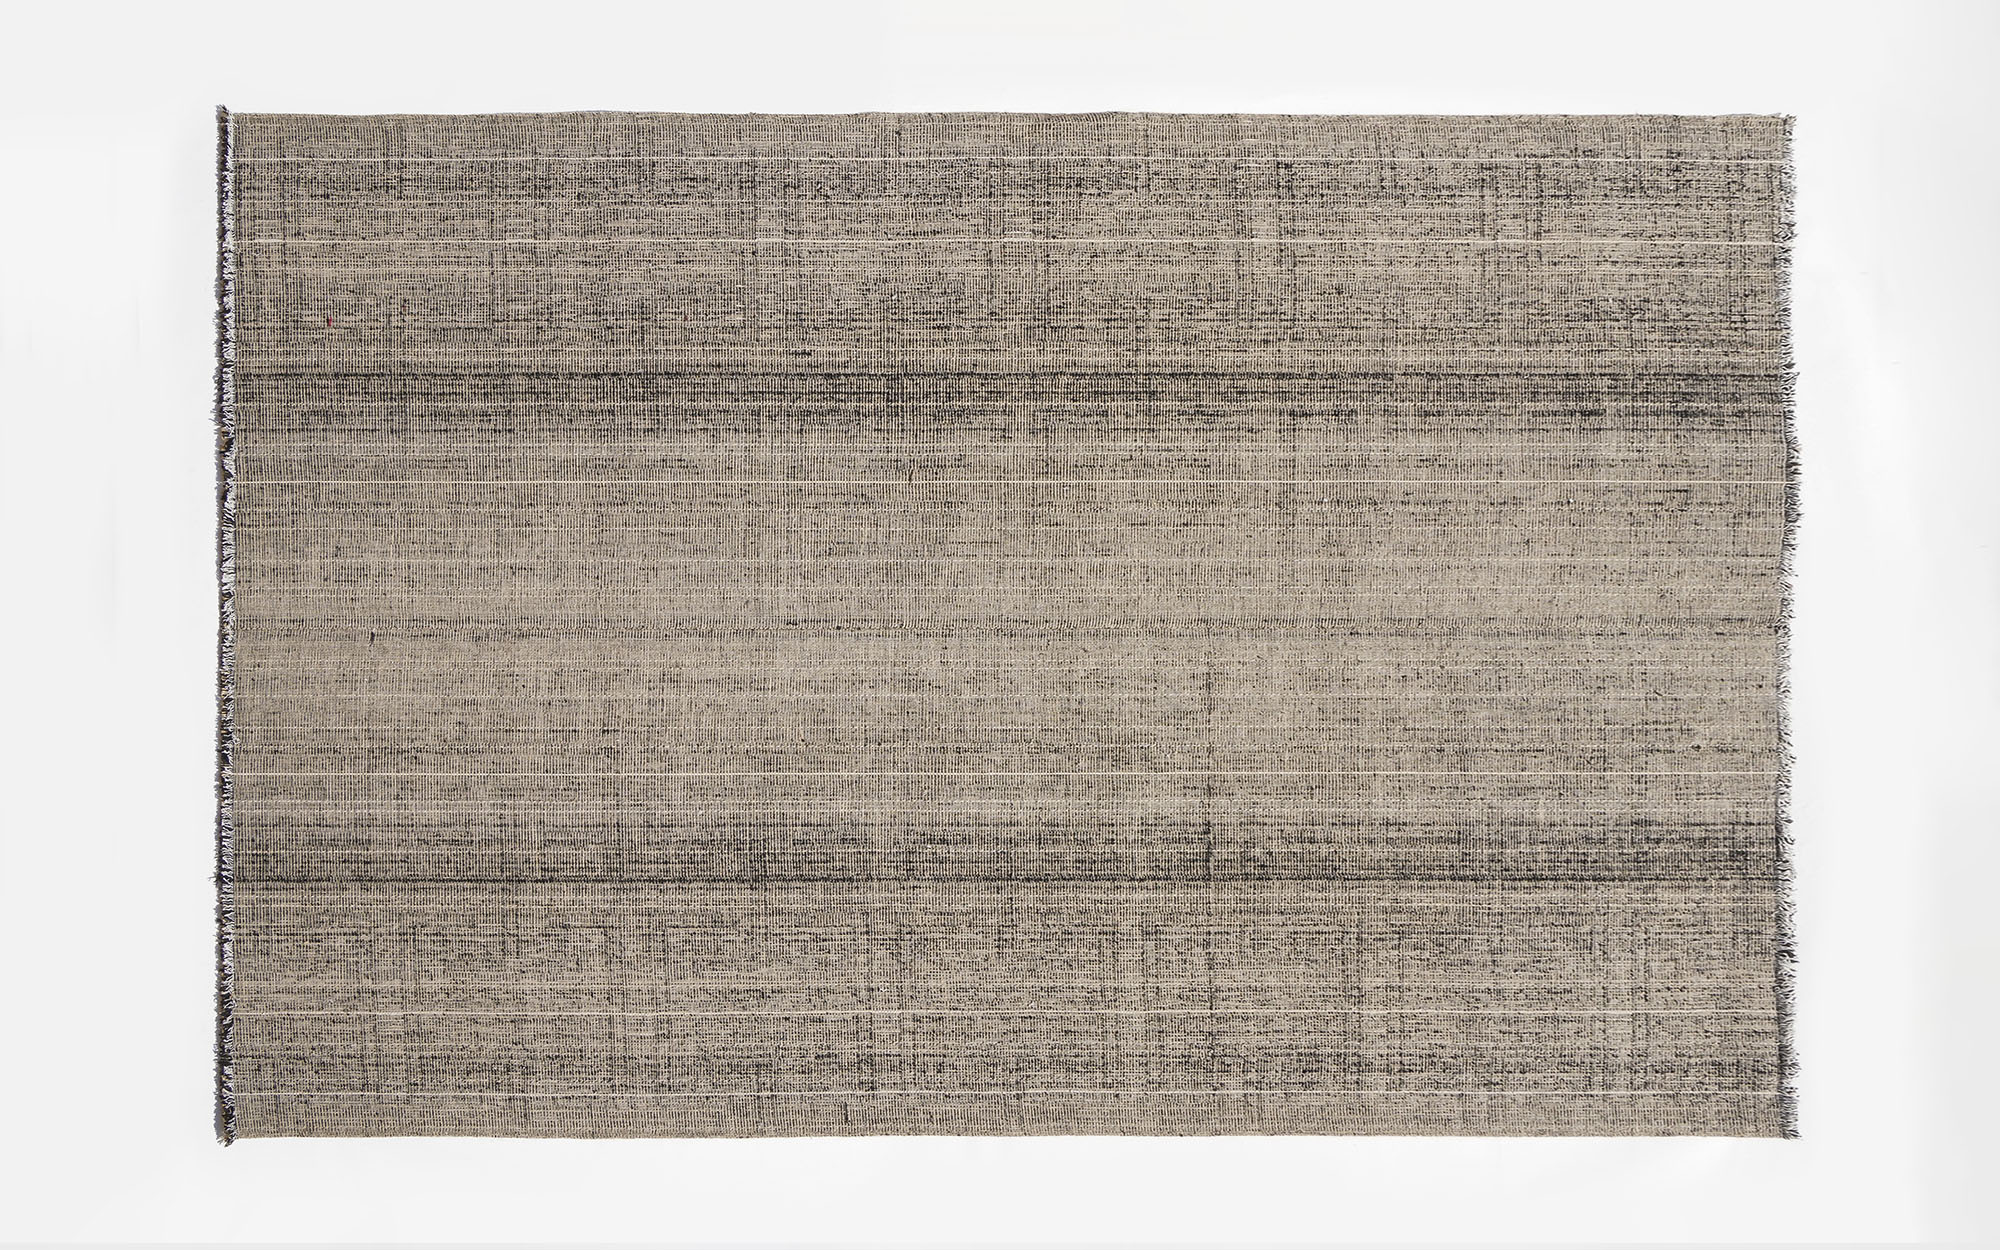 Wilton Carpet M - Ronan & Erwan Bouroullec - Stool - Galerie kreo